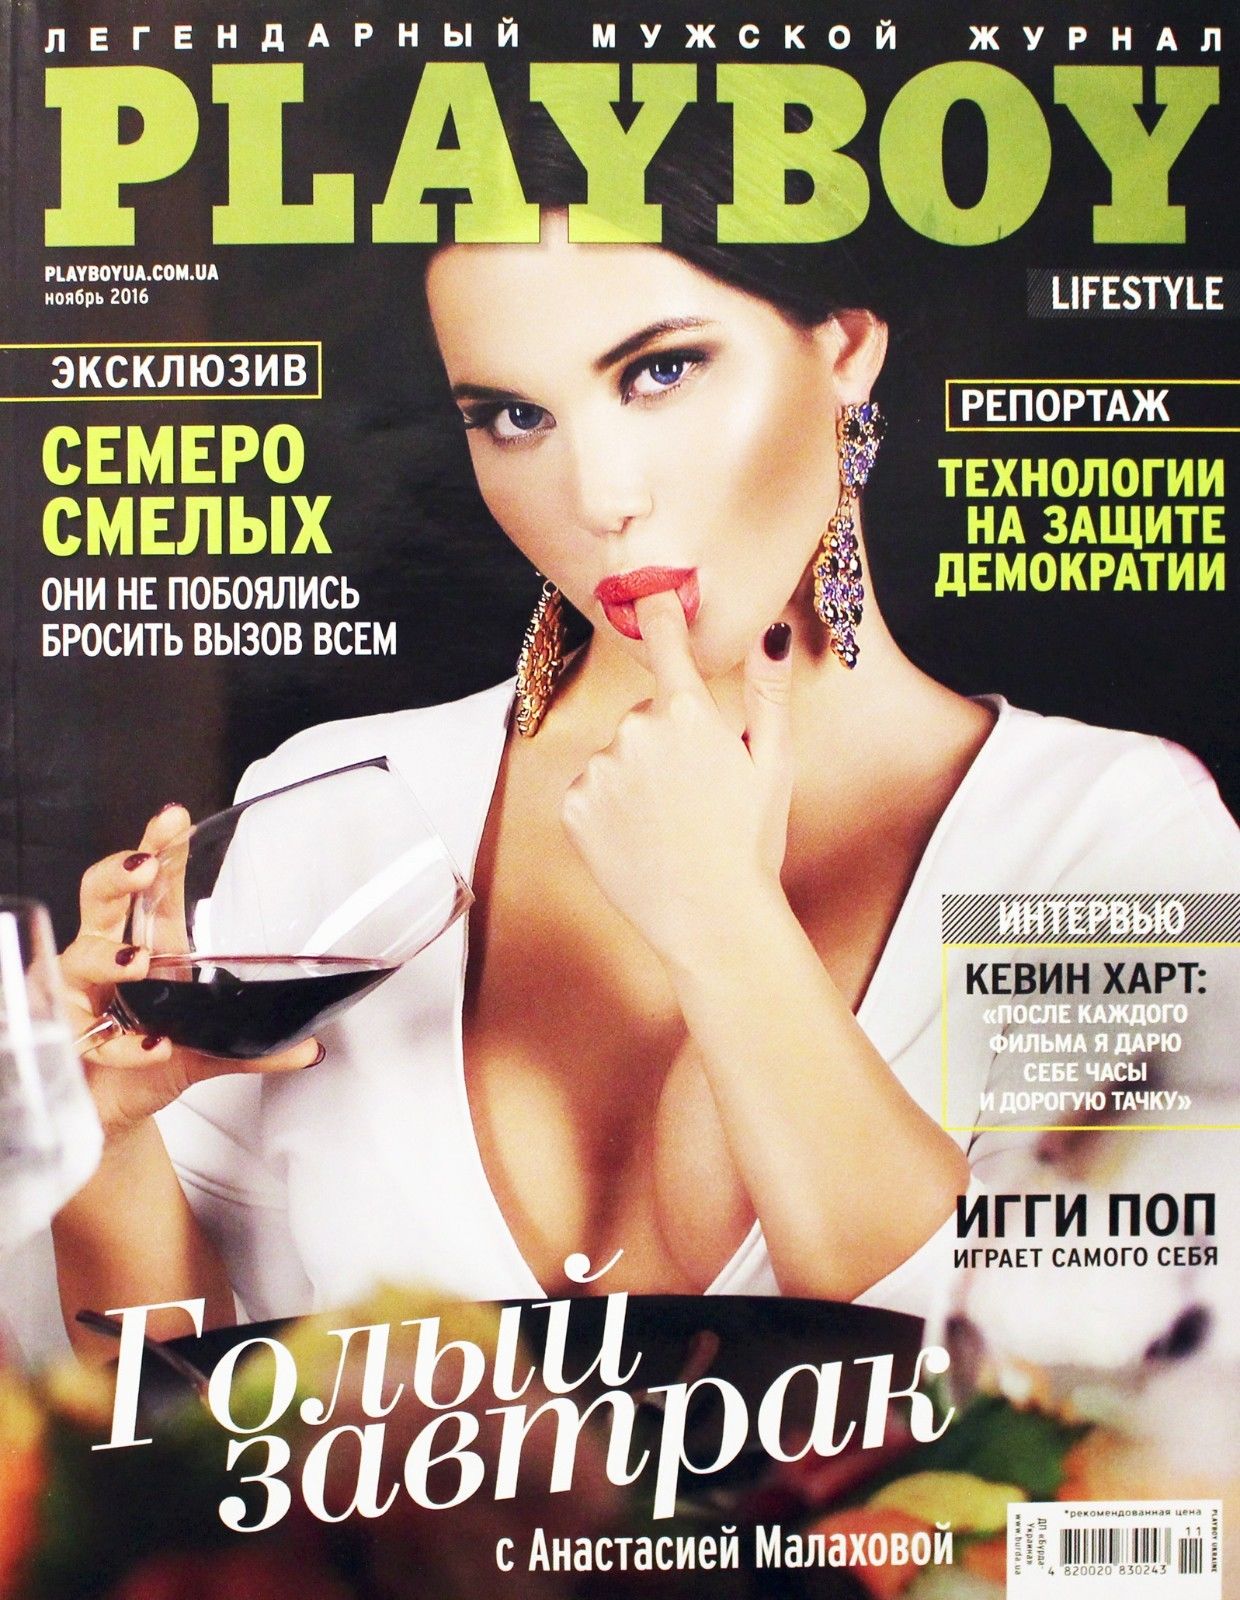 Playboy Nov 2016 magazine reviews